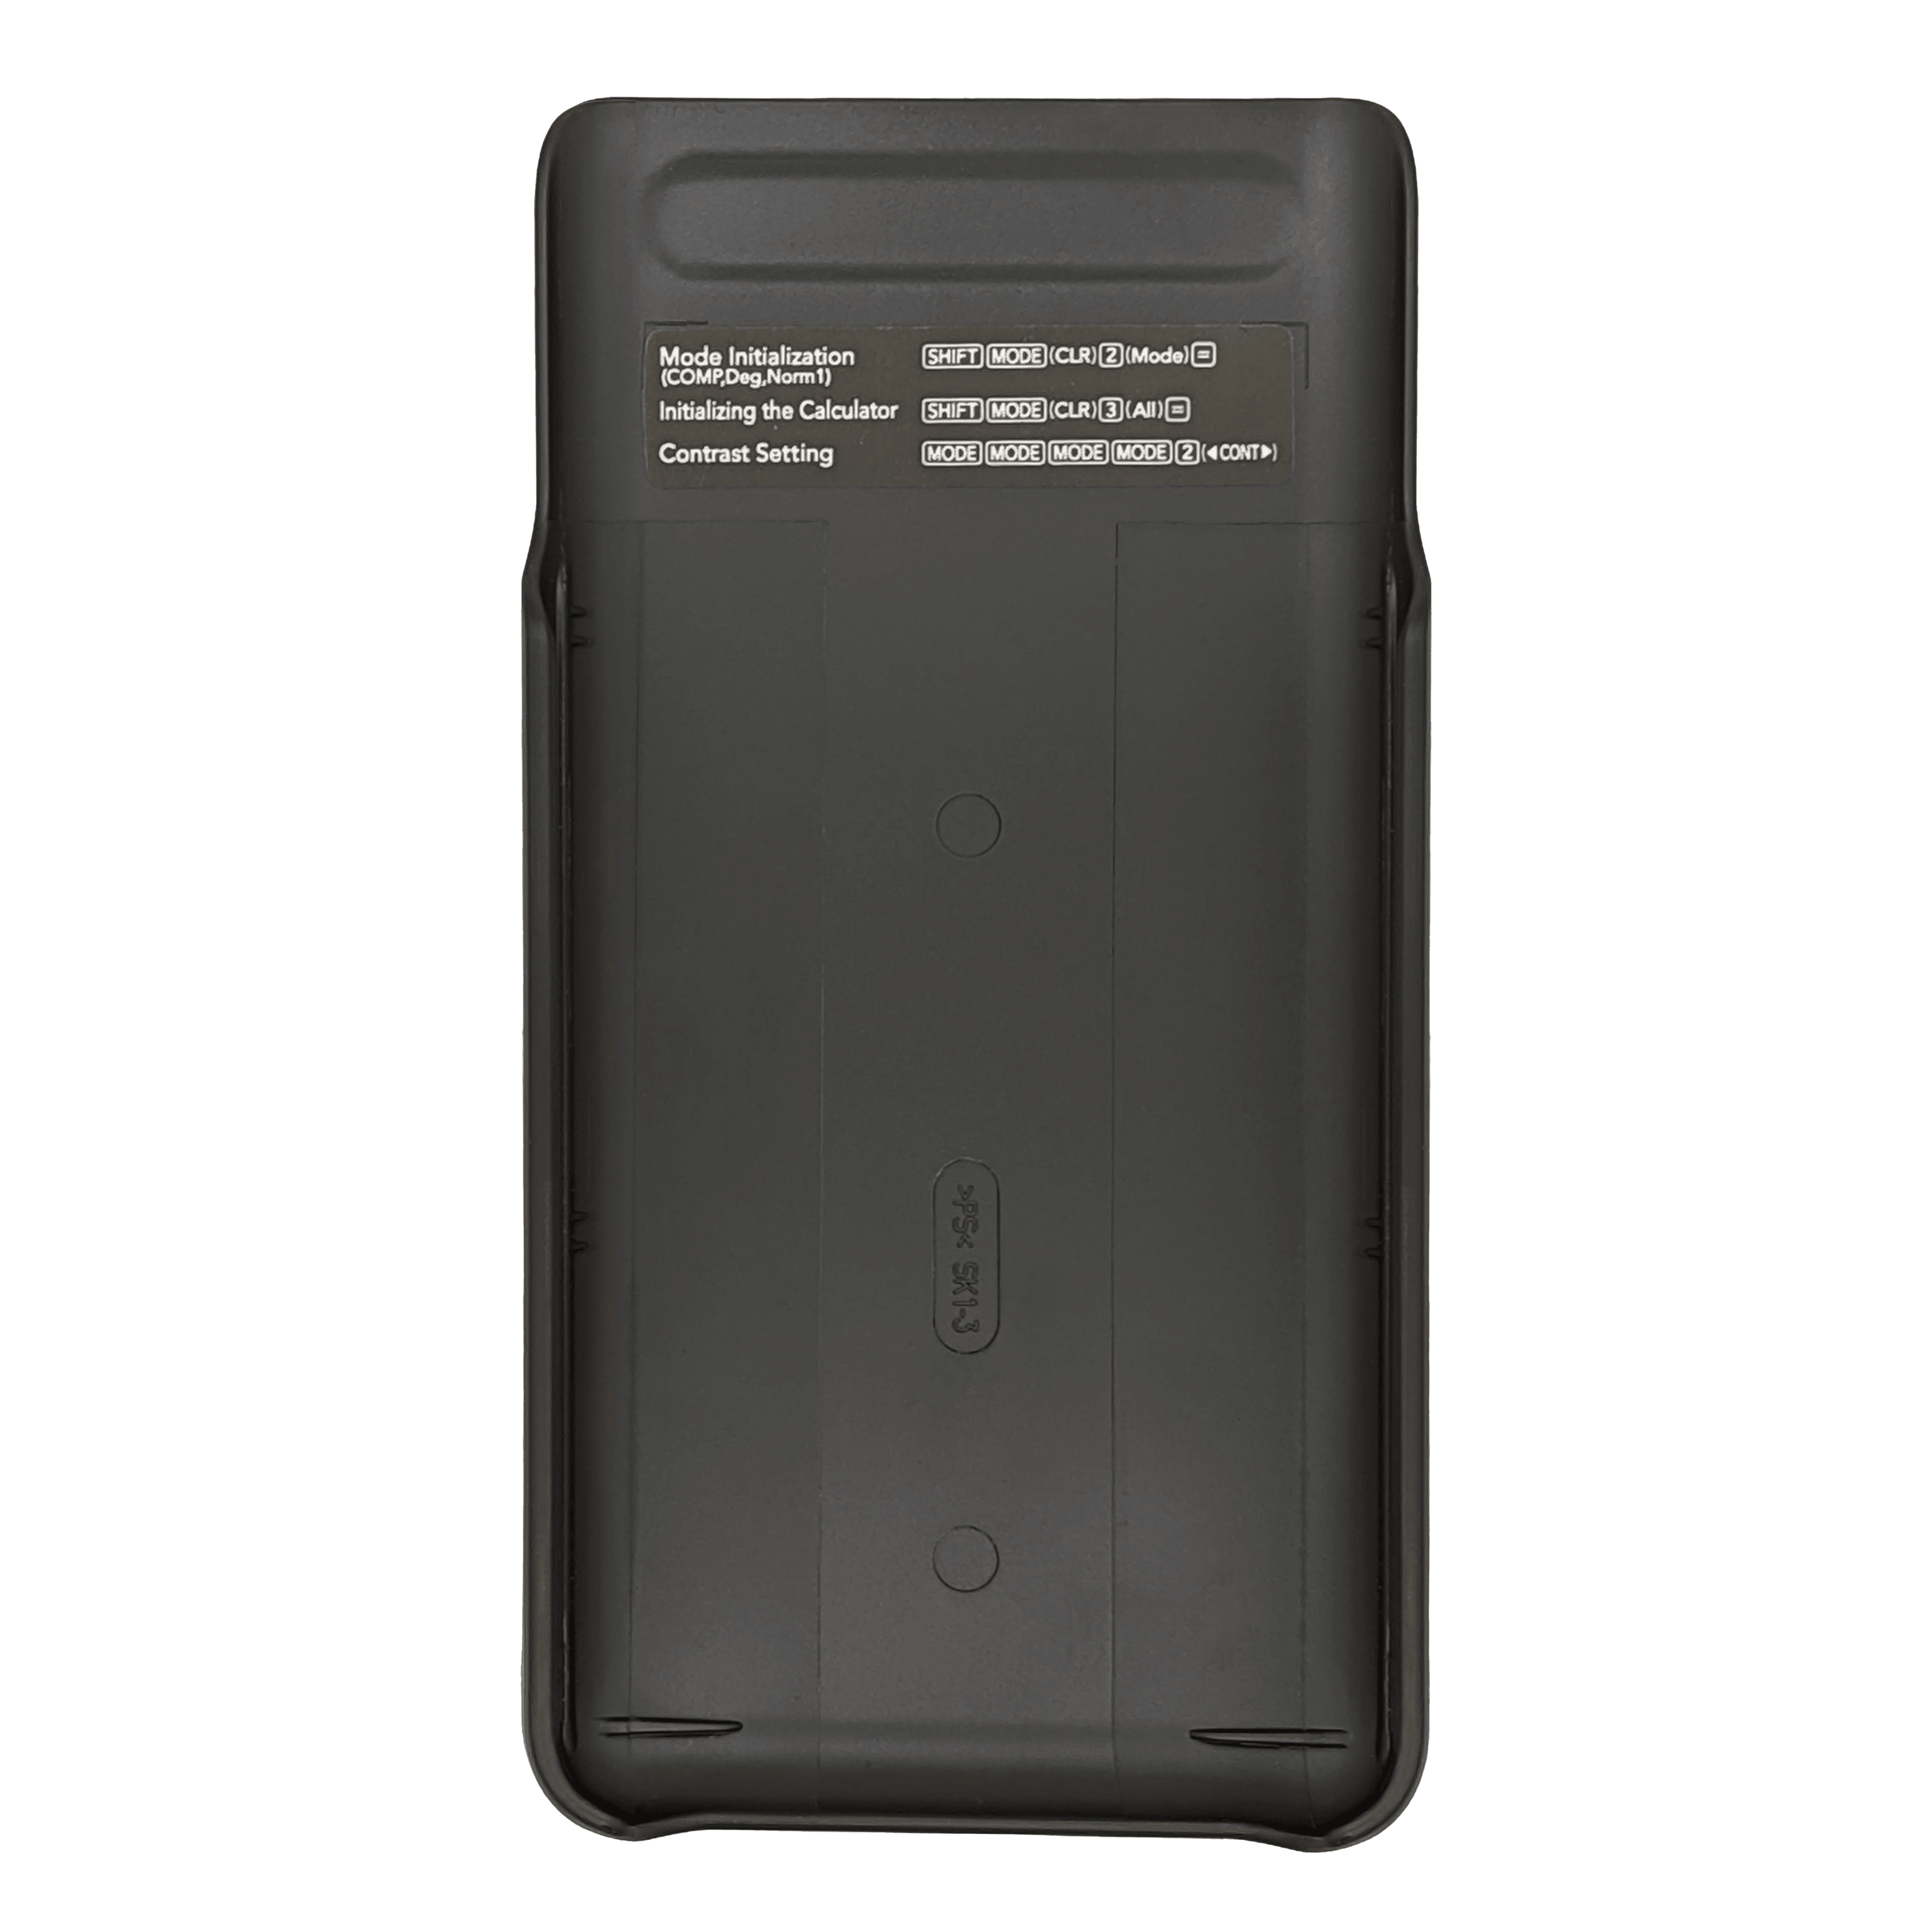 Casio fx-300MS PLUS 2nd Edition - Underwood Distributing Co.